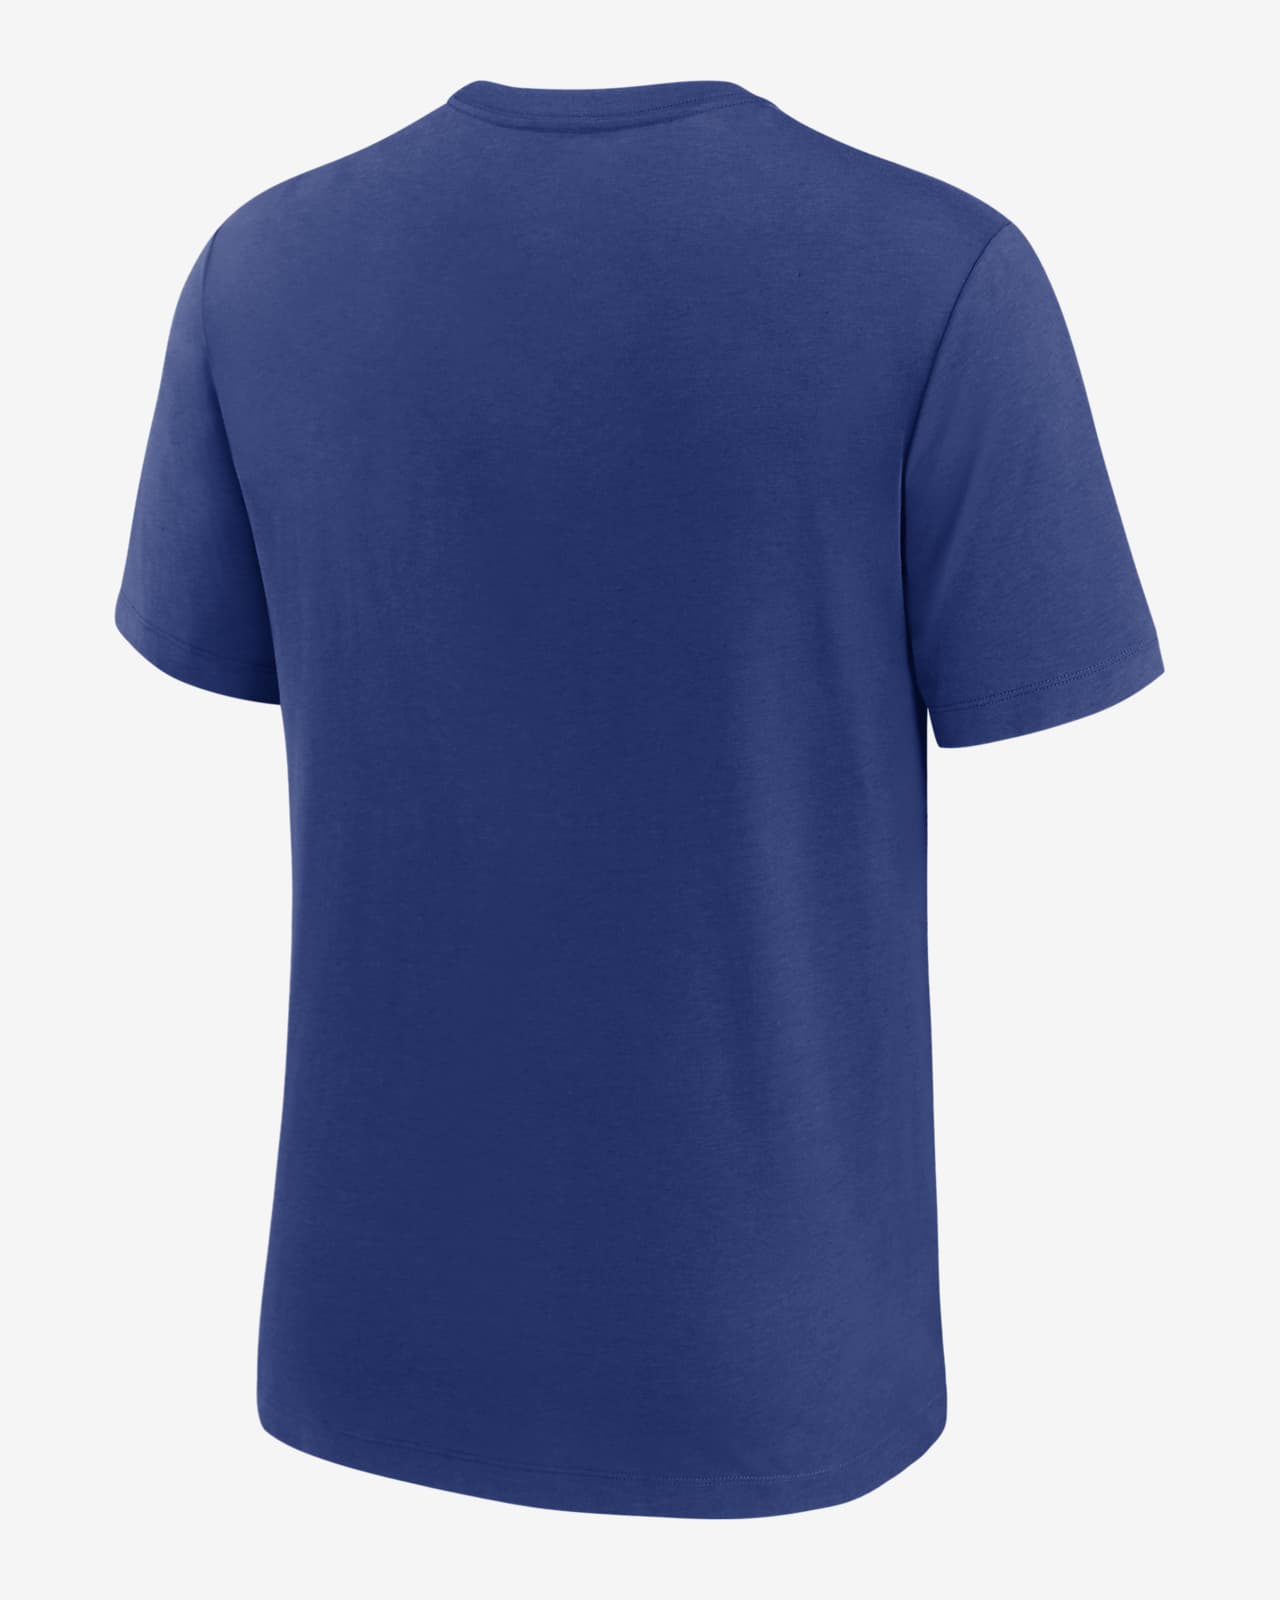 Nike Rewind Retro (MLB New York Mets) Men's T-Shirt.